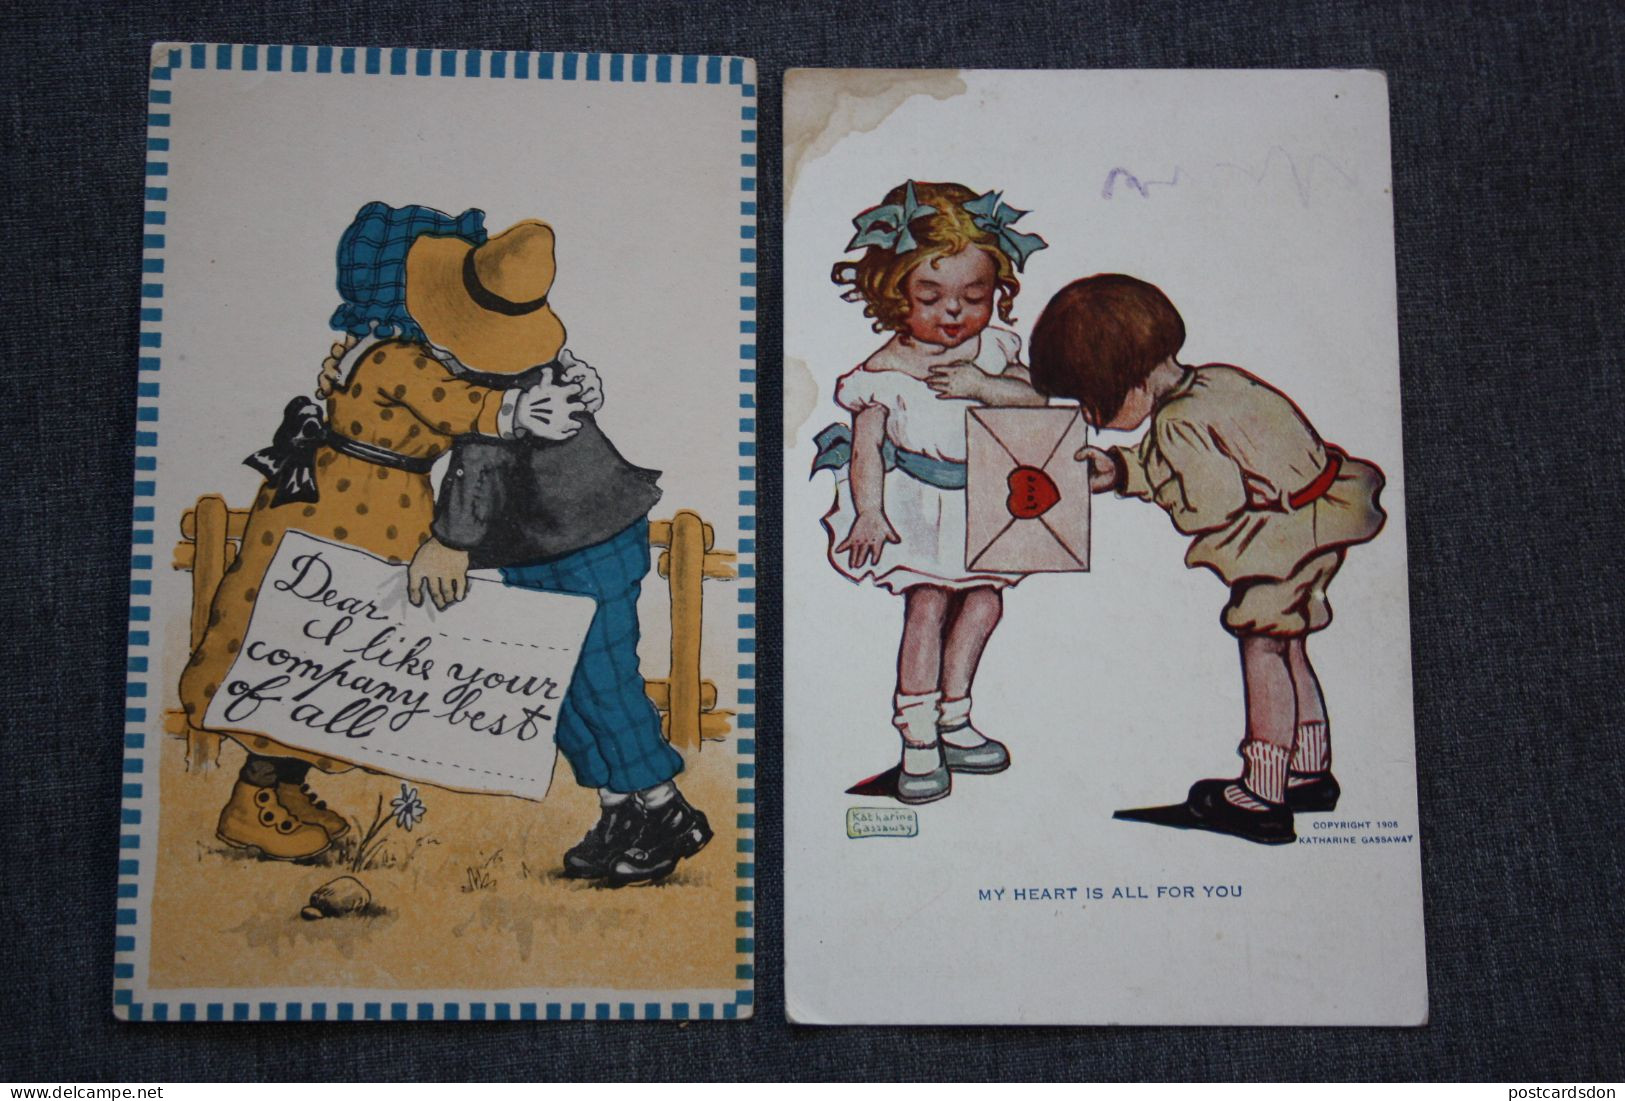 HUMOUR, COMICS - Old Postcard 1920s - Usa Edition - - 2 PCs Lot - Katharine Gassaway Artist Signed Image 'Introduction' - Humour